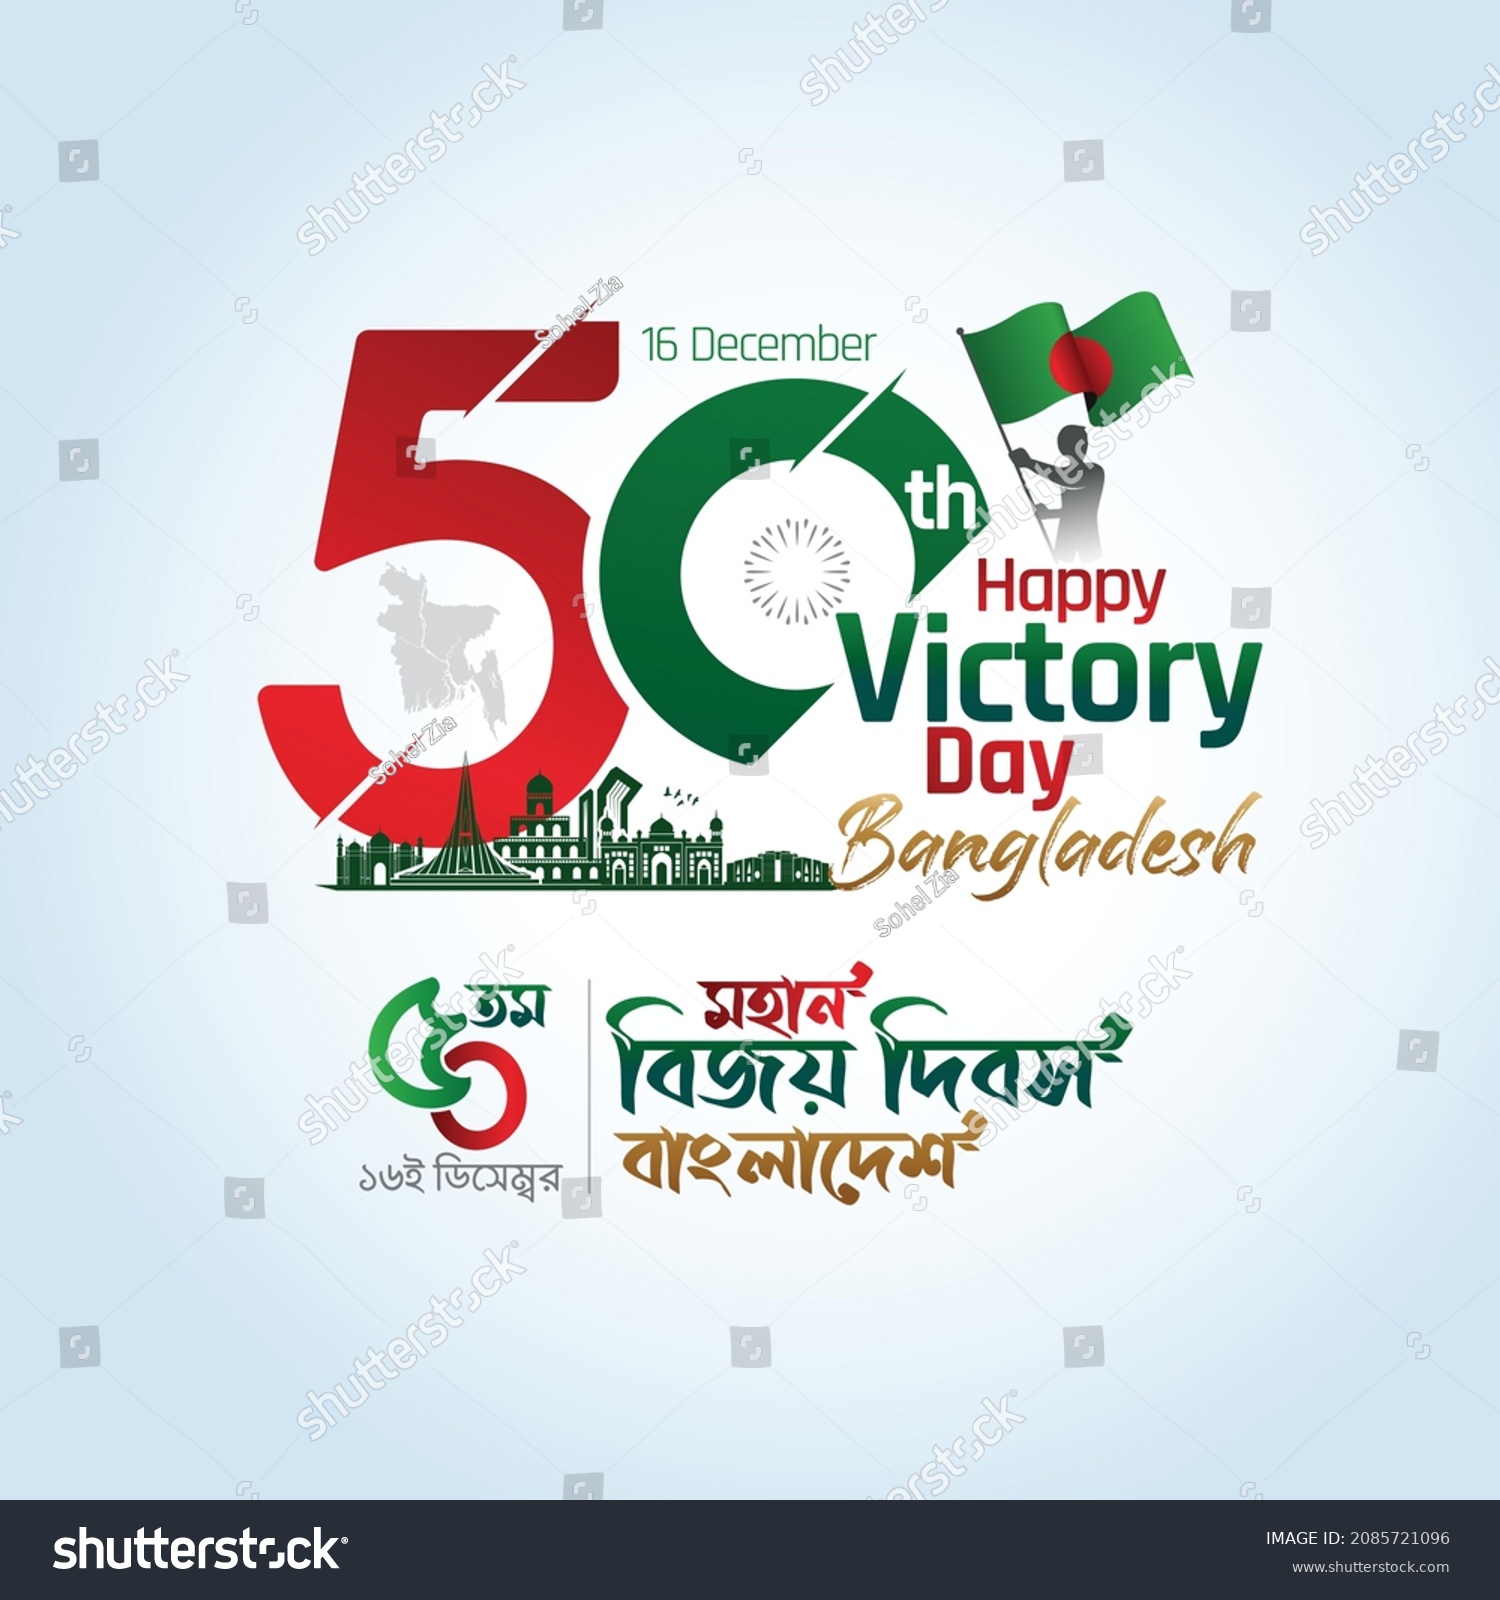 Victory day of Bangladesh (16 December) celebration illustration #2085721096